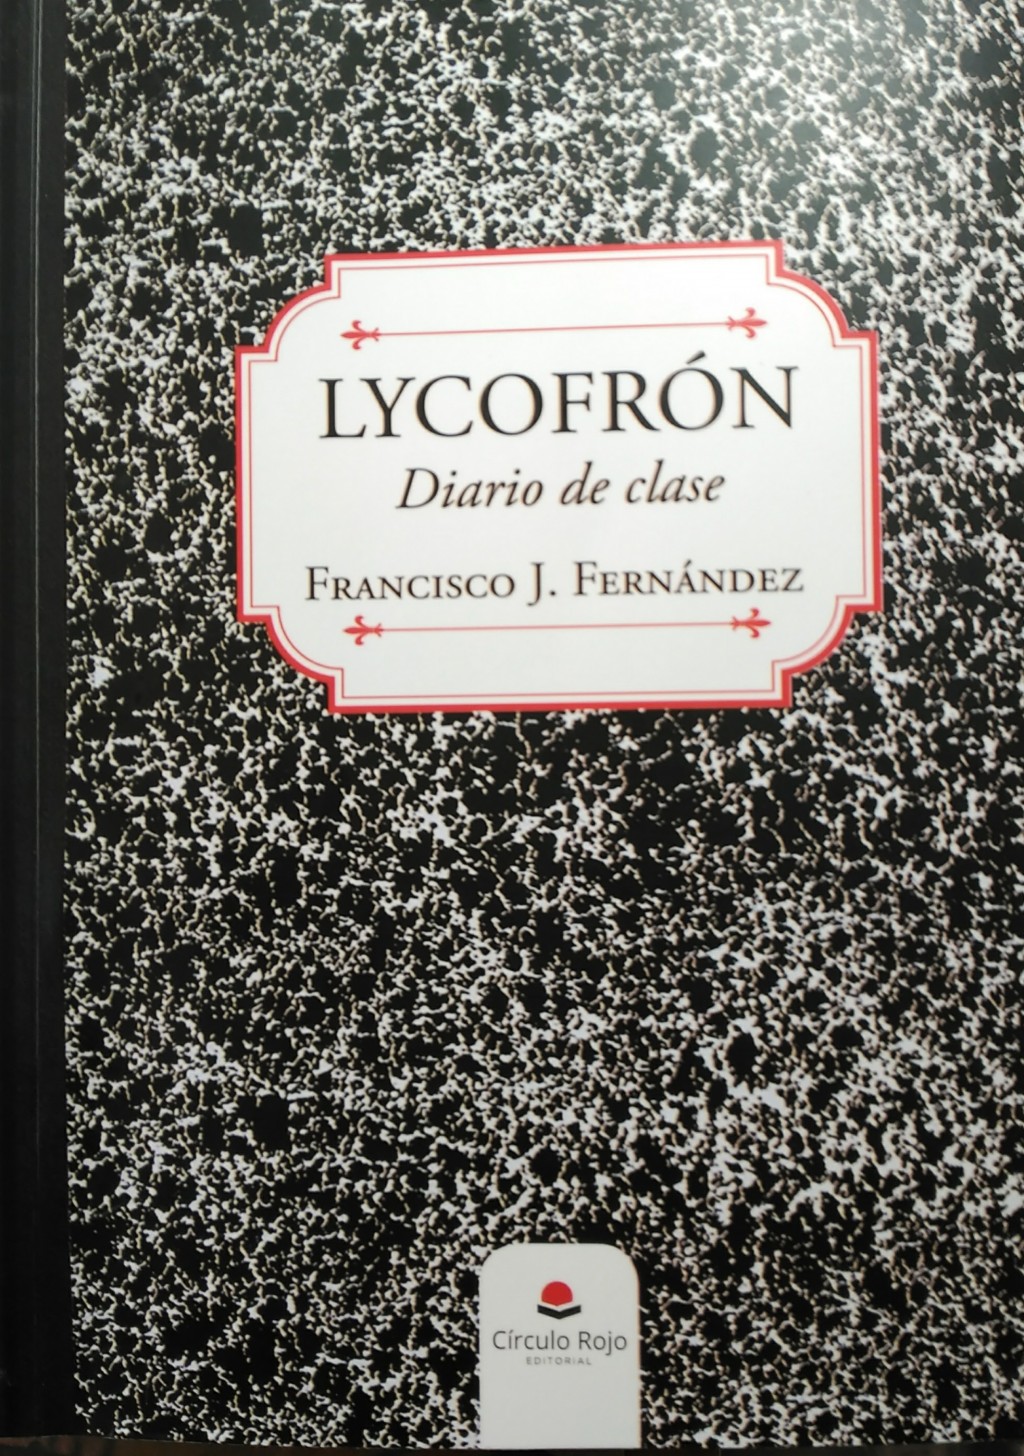 Lycofrón, diario de clase, Francisco J. Fernández